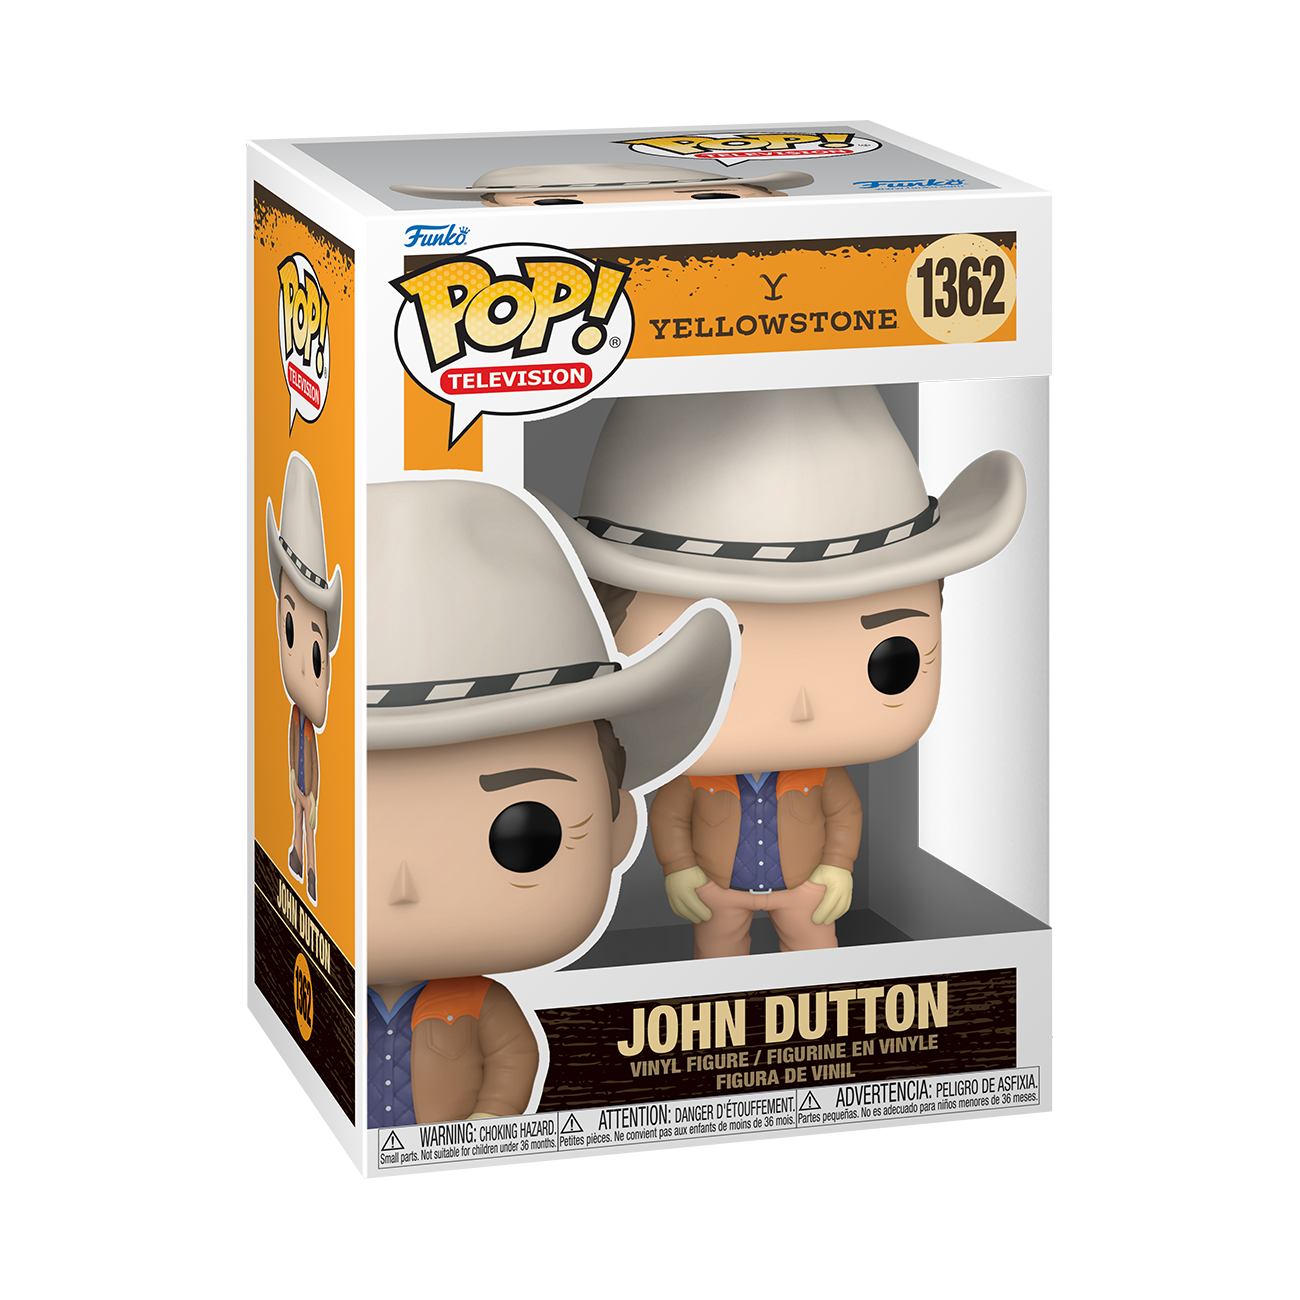 Yellowstone John Dutton Funko Pop! Vinyl Figur